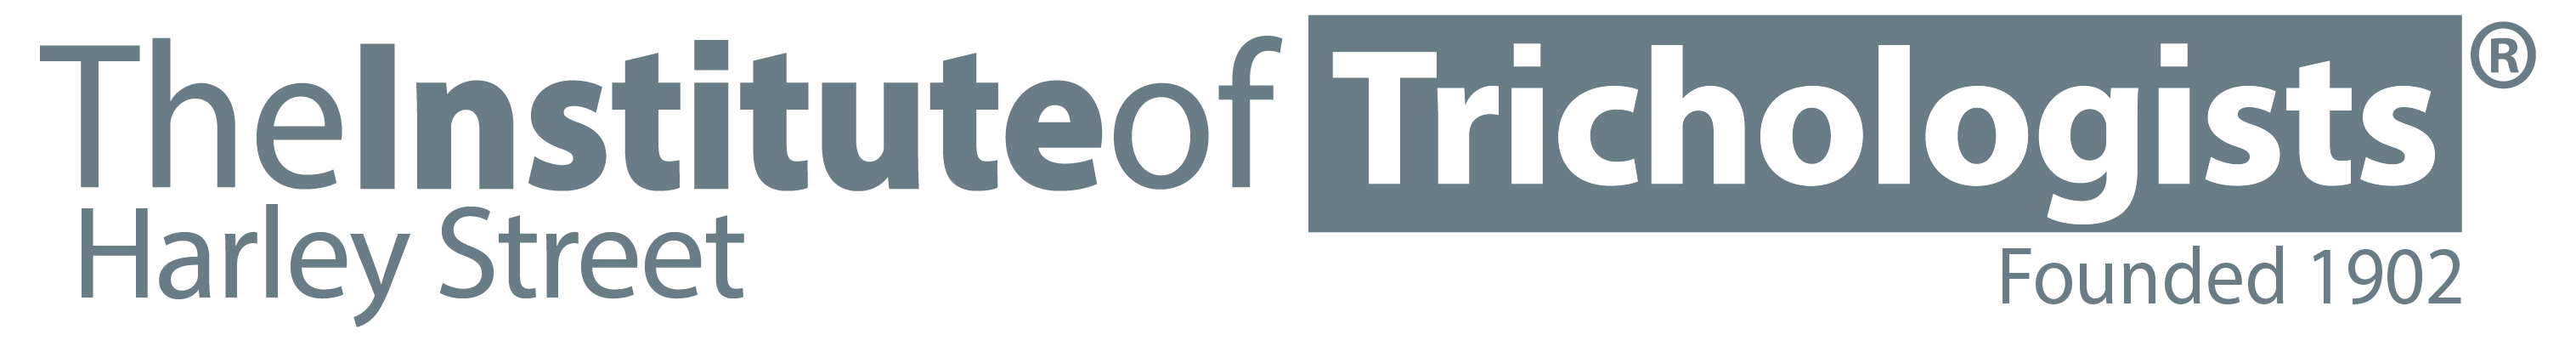 InstituteofTrichologists logo